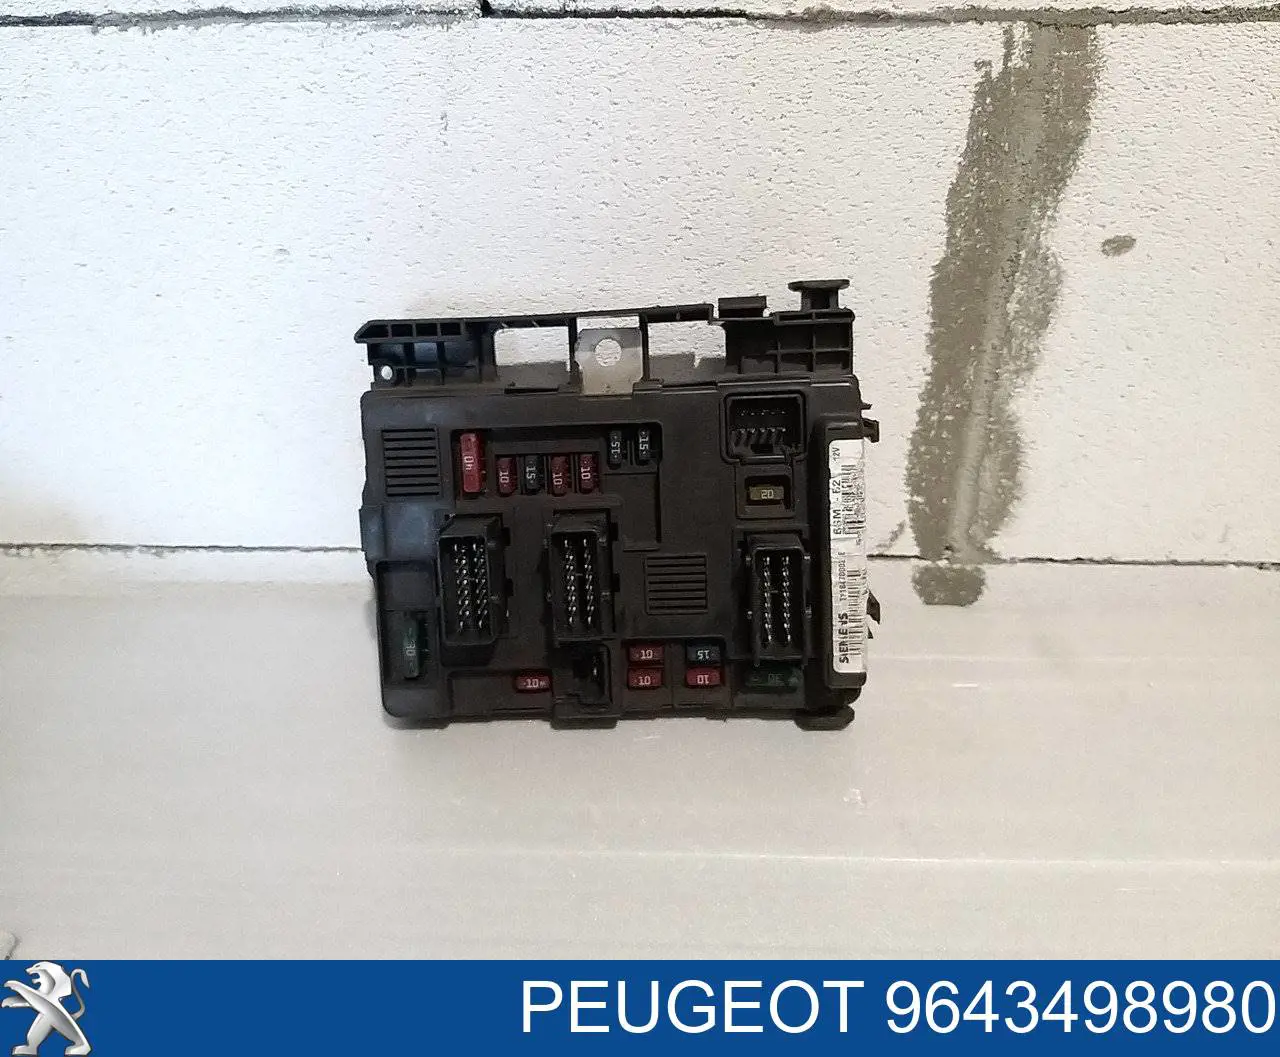 9643498980 Peugeot/Citroen unidade de dispositivos de segurança